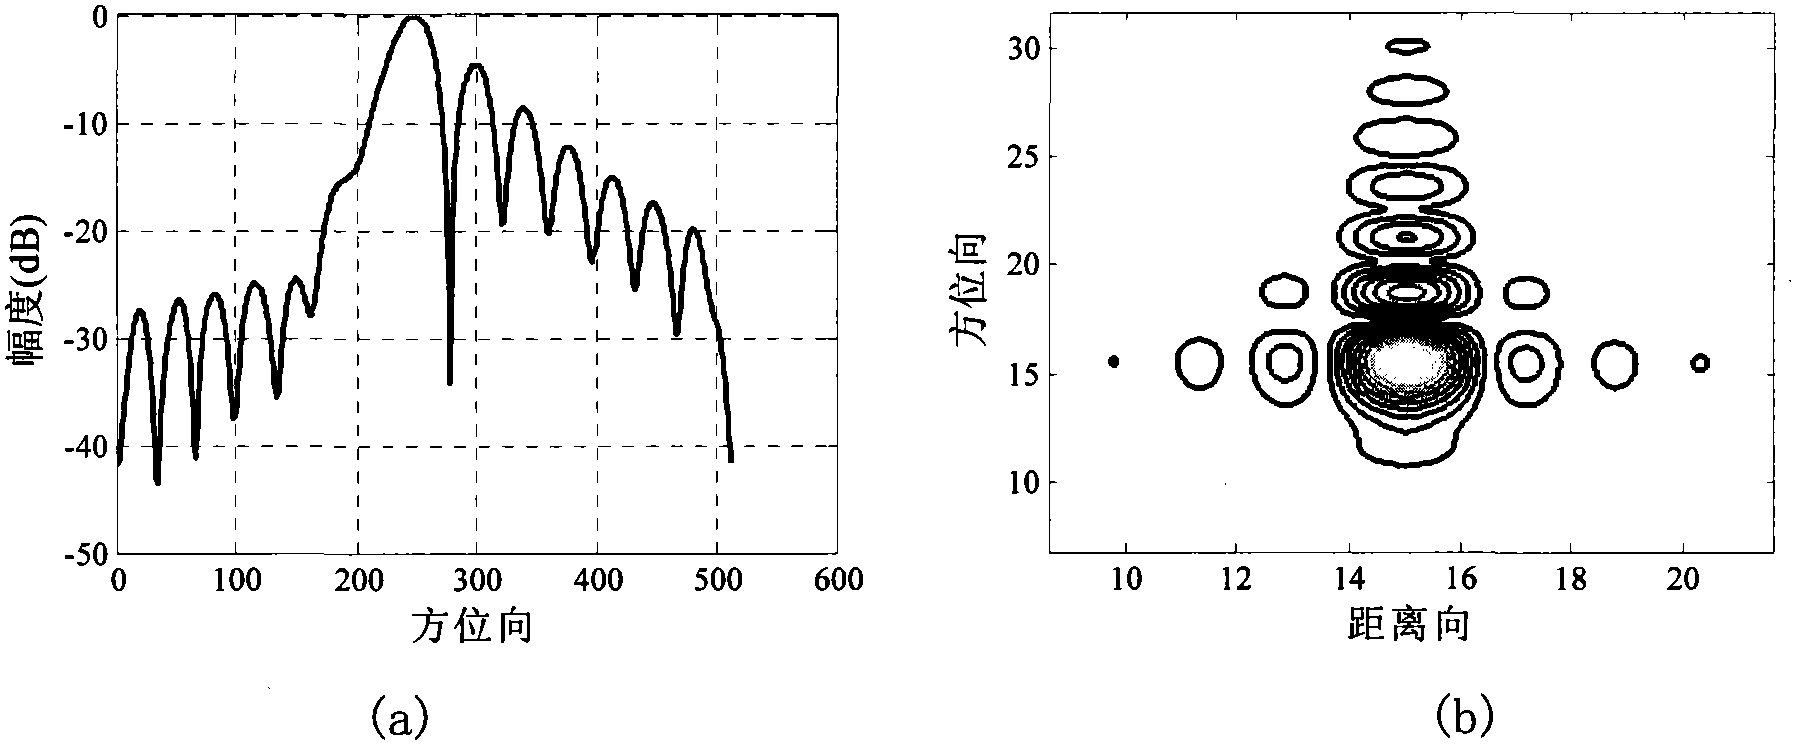 Equivalent range equation based SAR (synthetic aperture radar) ground motion target imaging method